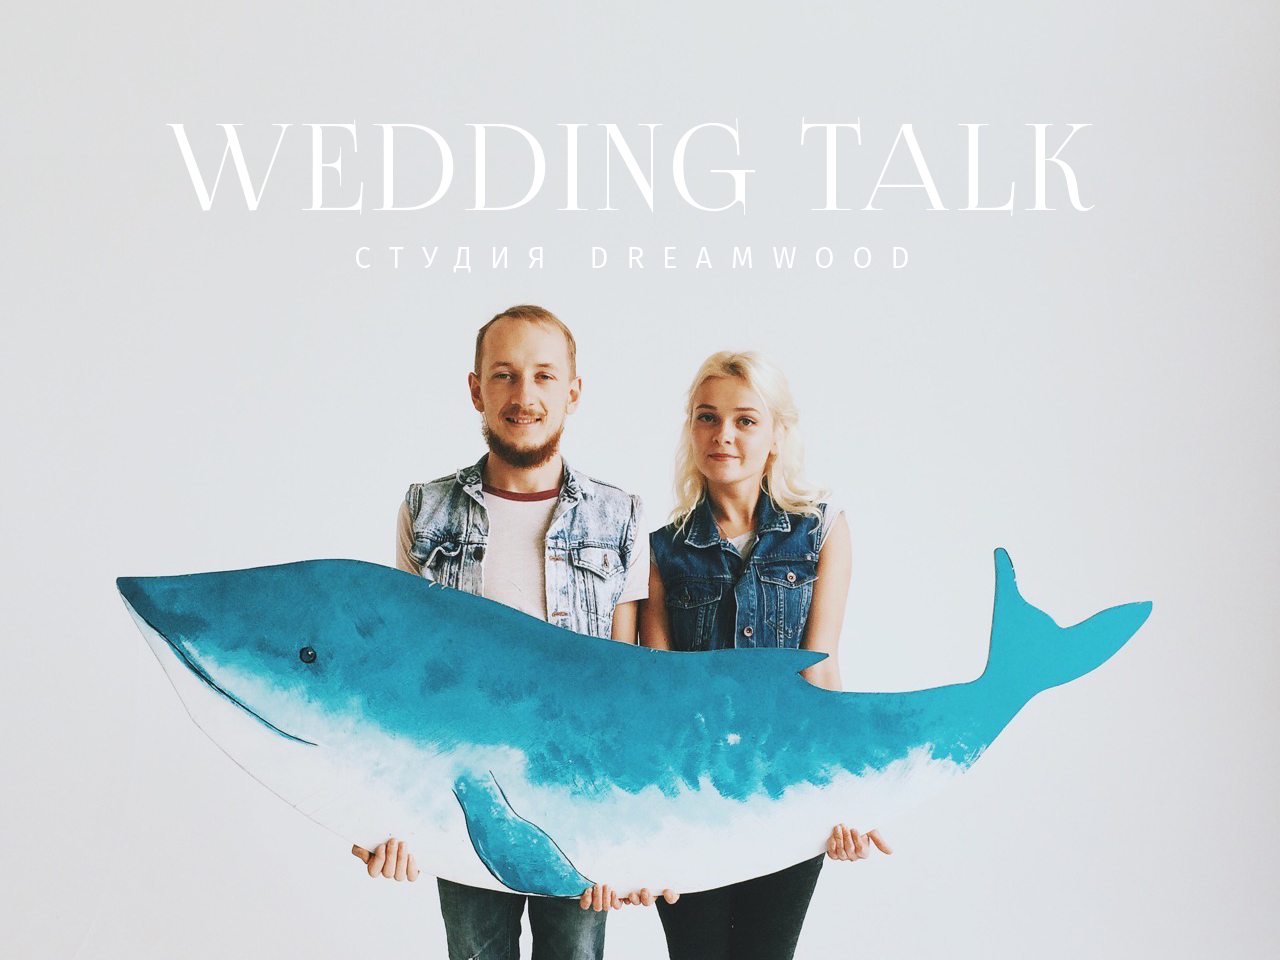 Wedding talk: Dreamwood studio